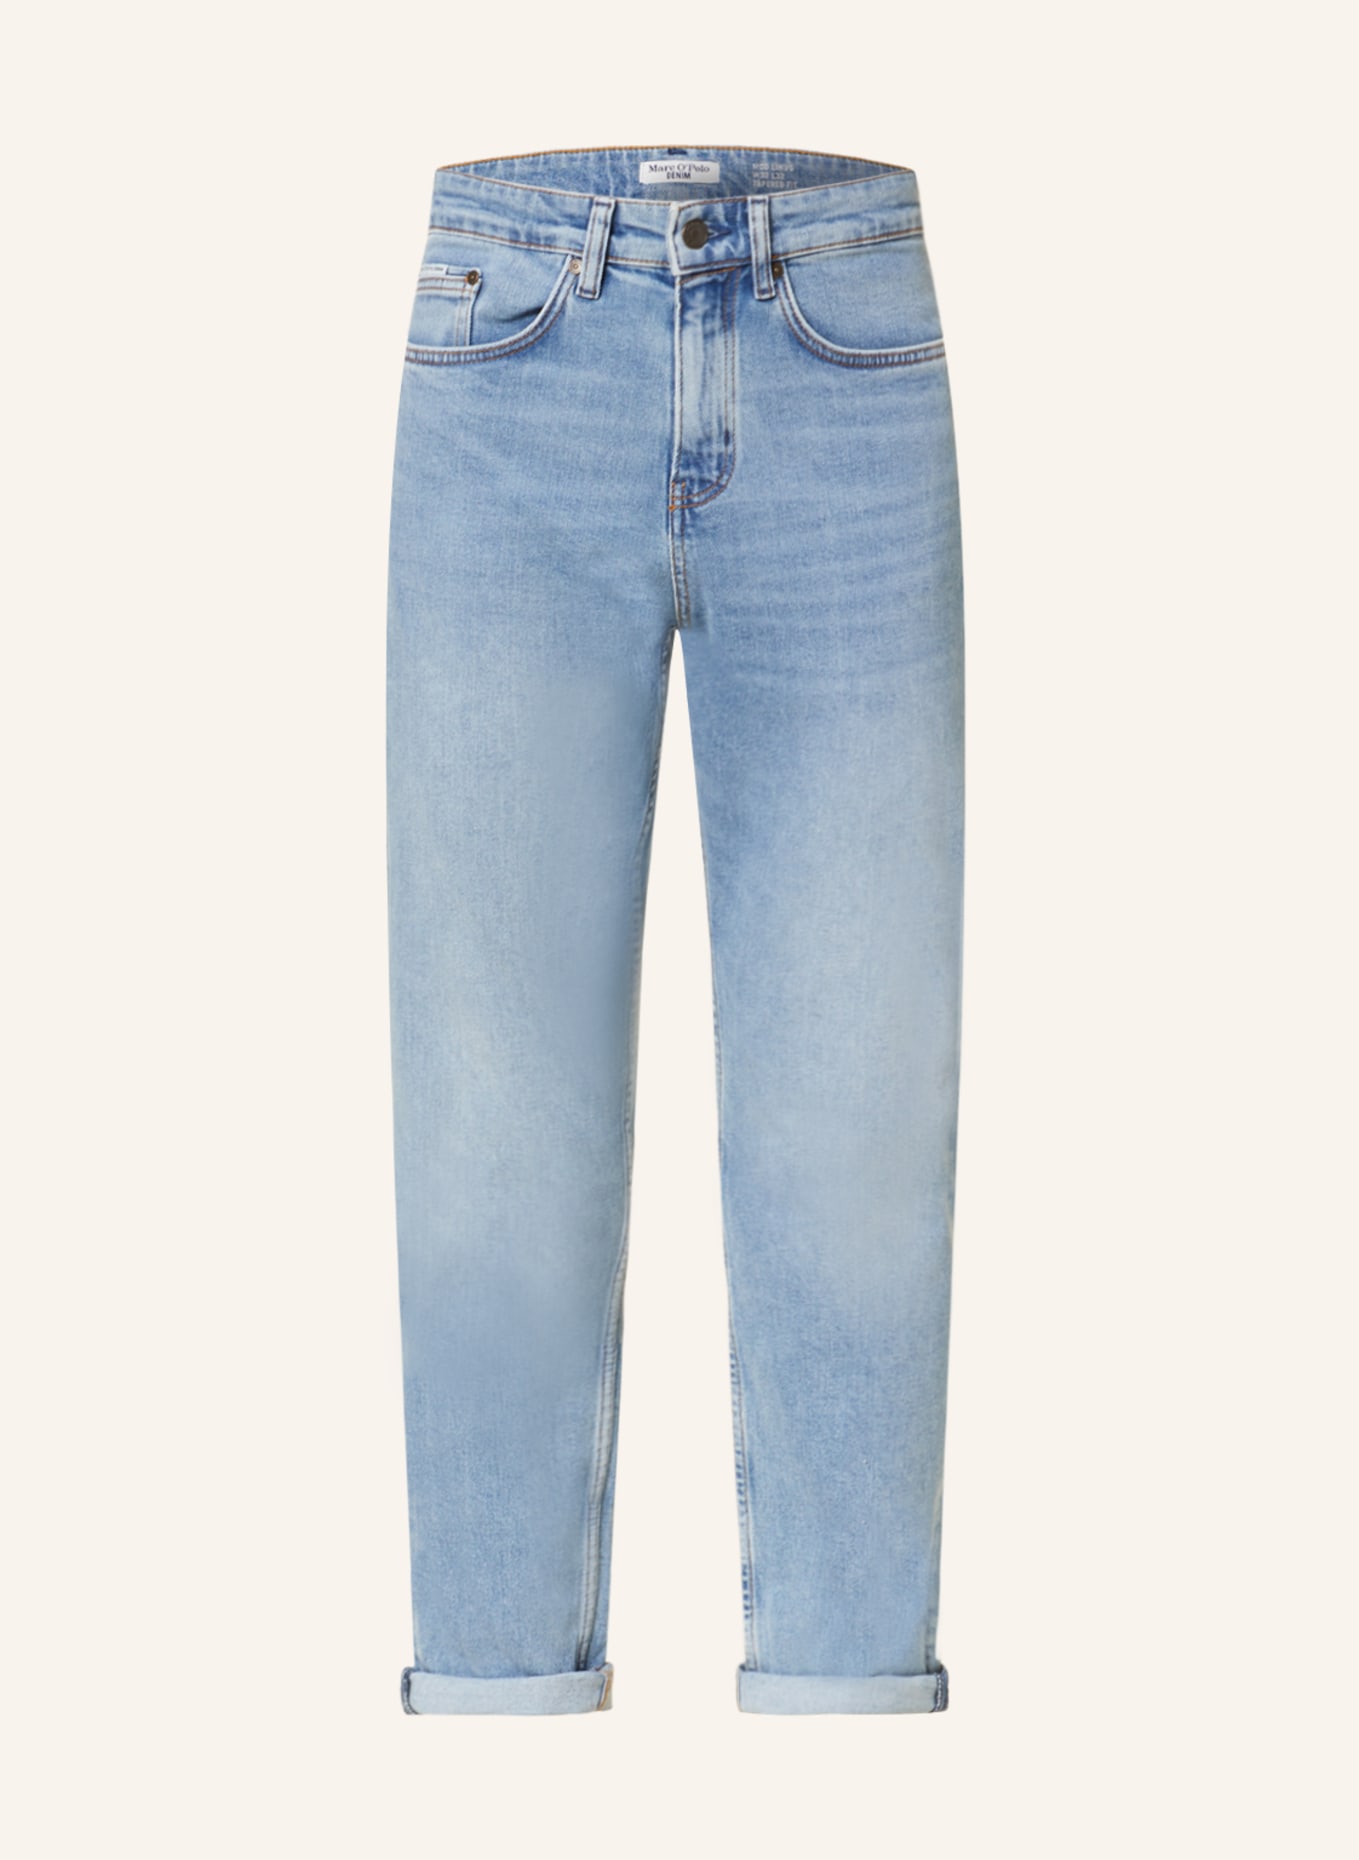 Marc O'Polo DENIM Jeans Tapered Fit, Farbe: P39 multi/vintage light cobalt blu (Bild 1)